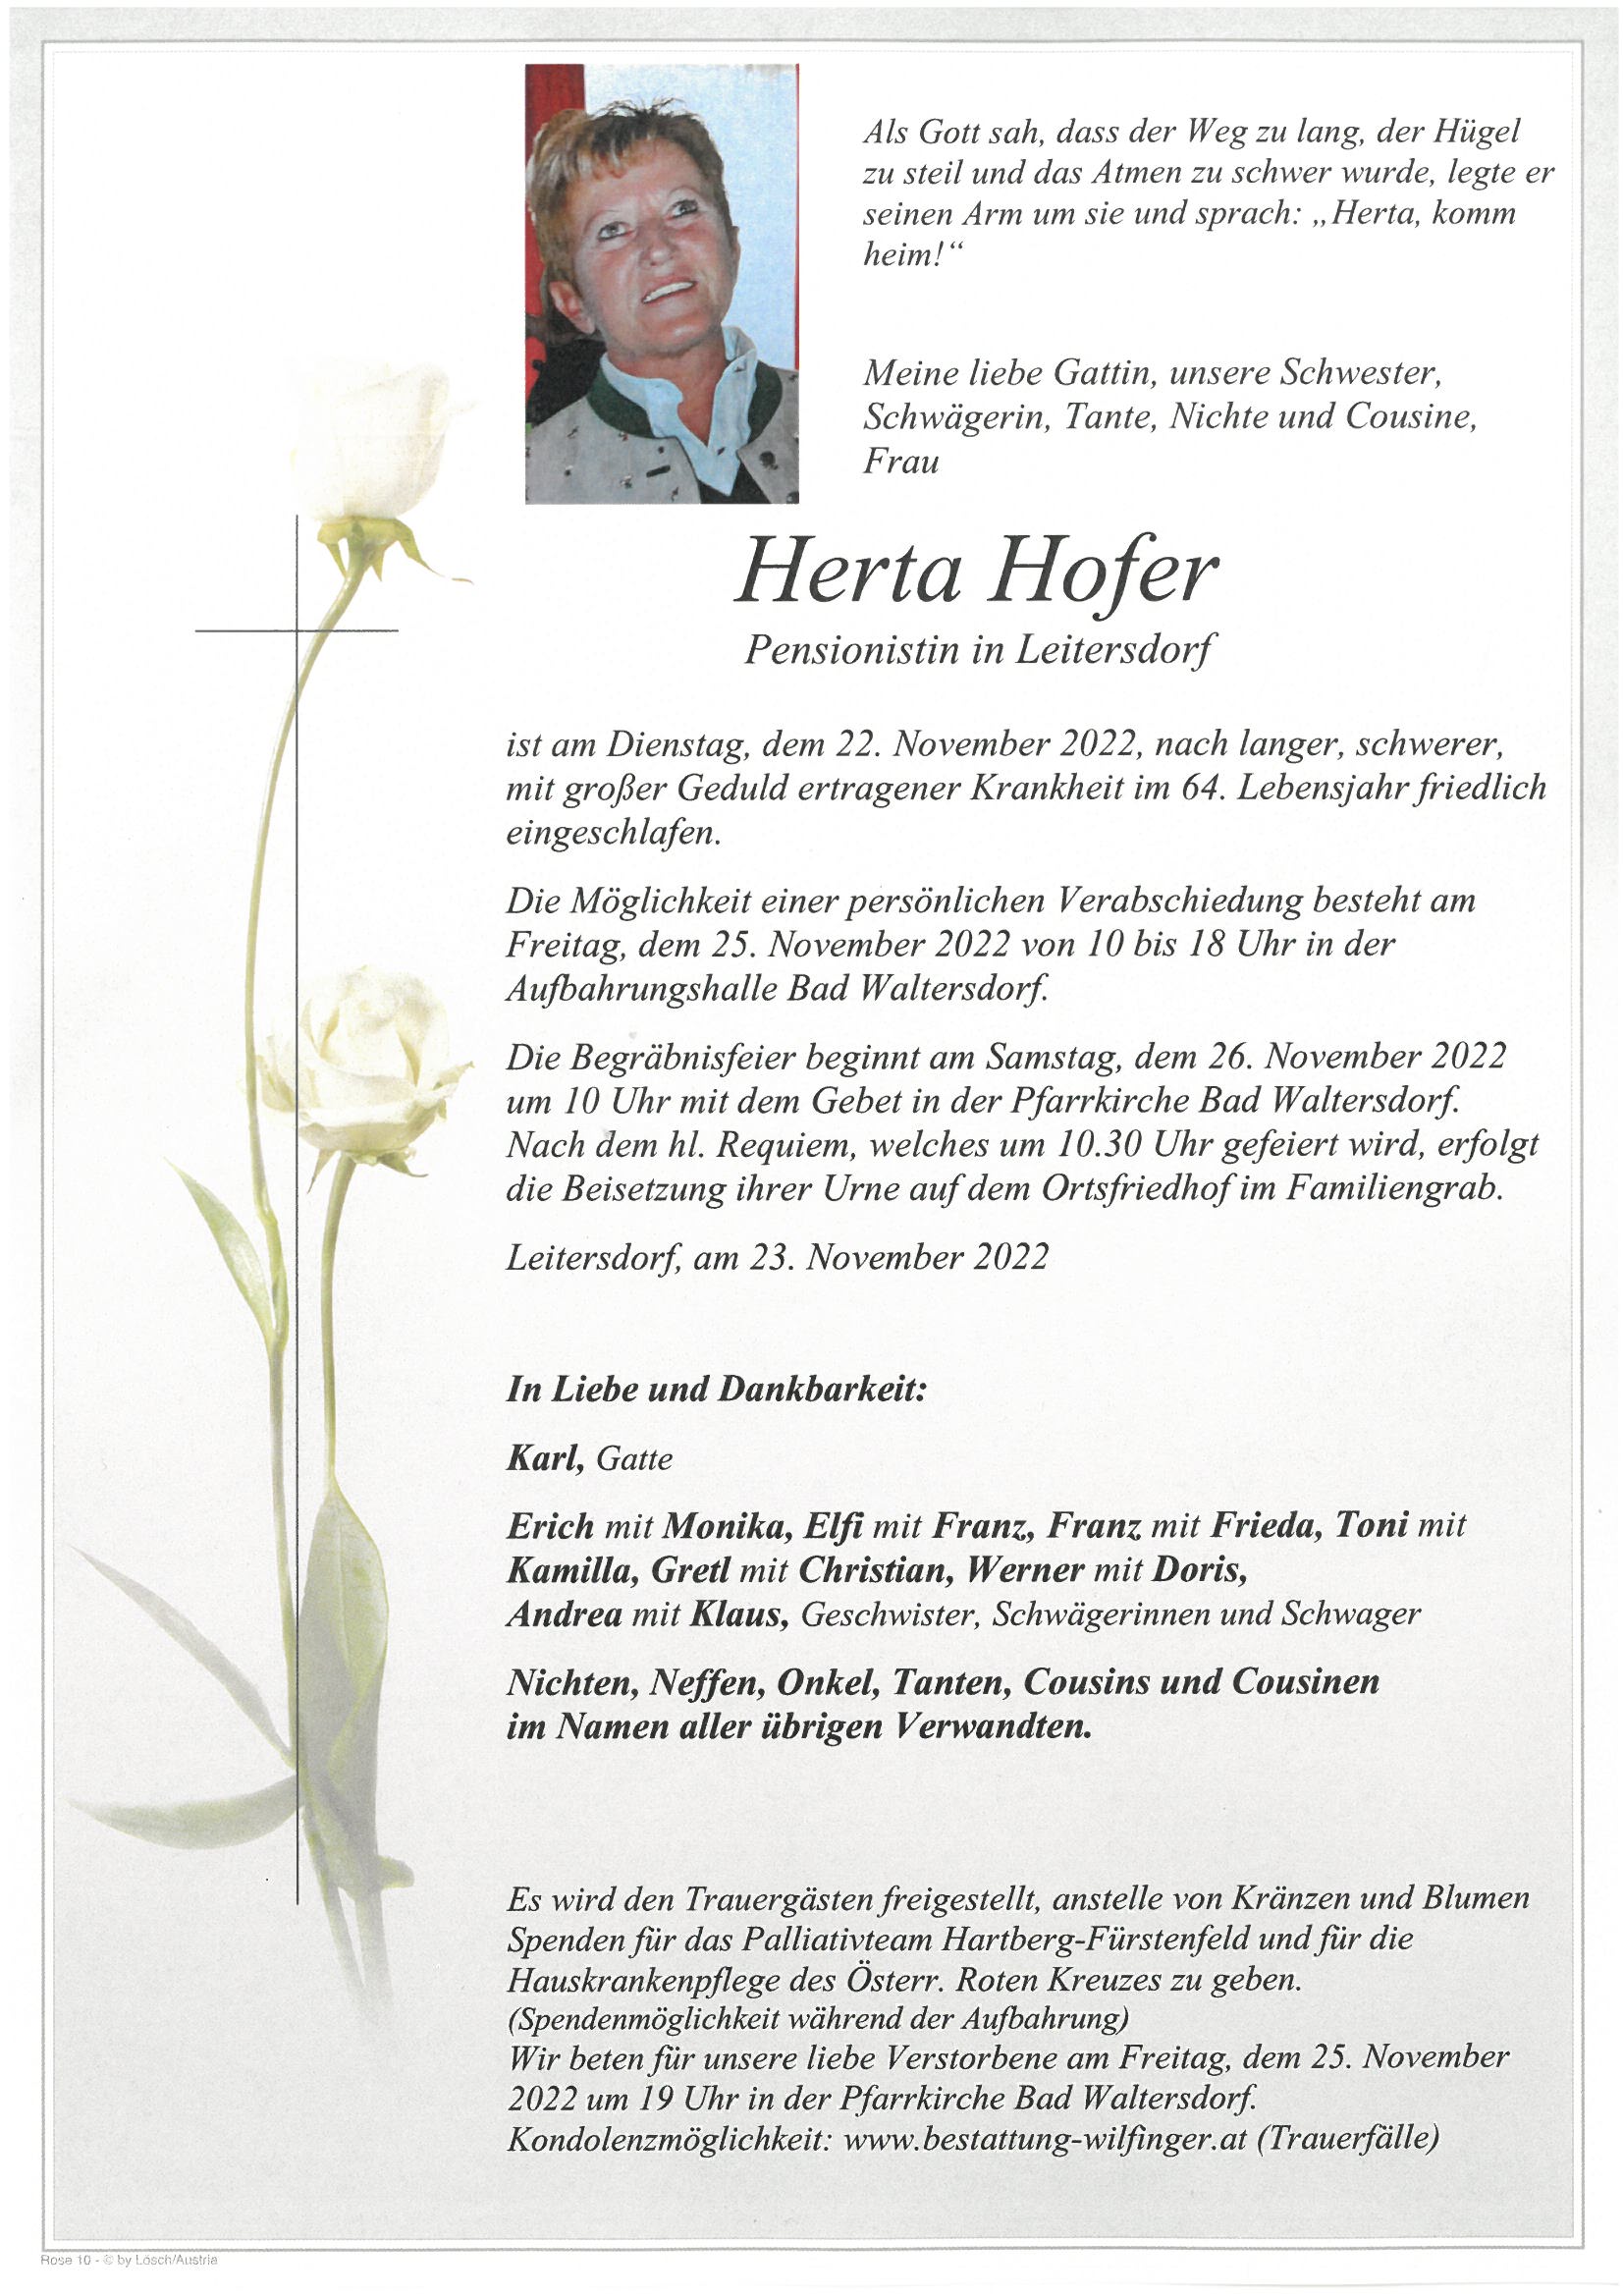 Herta Hofer, Leitersdorf